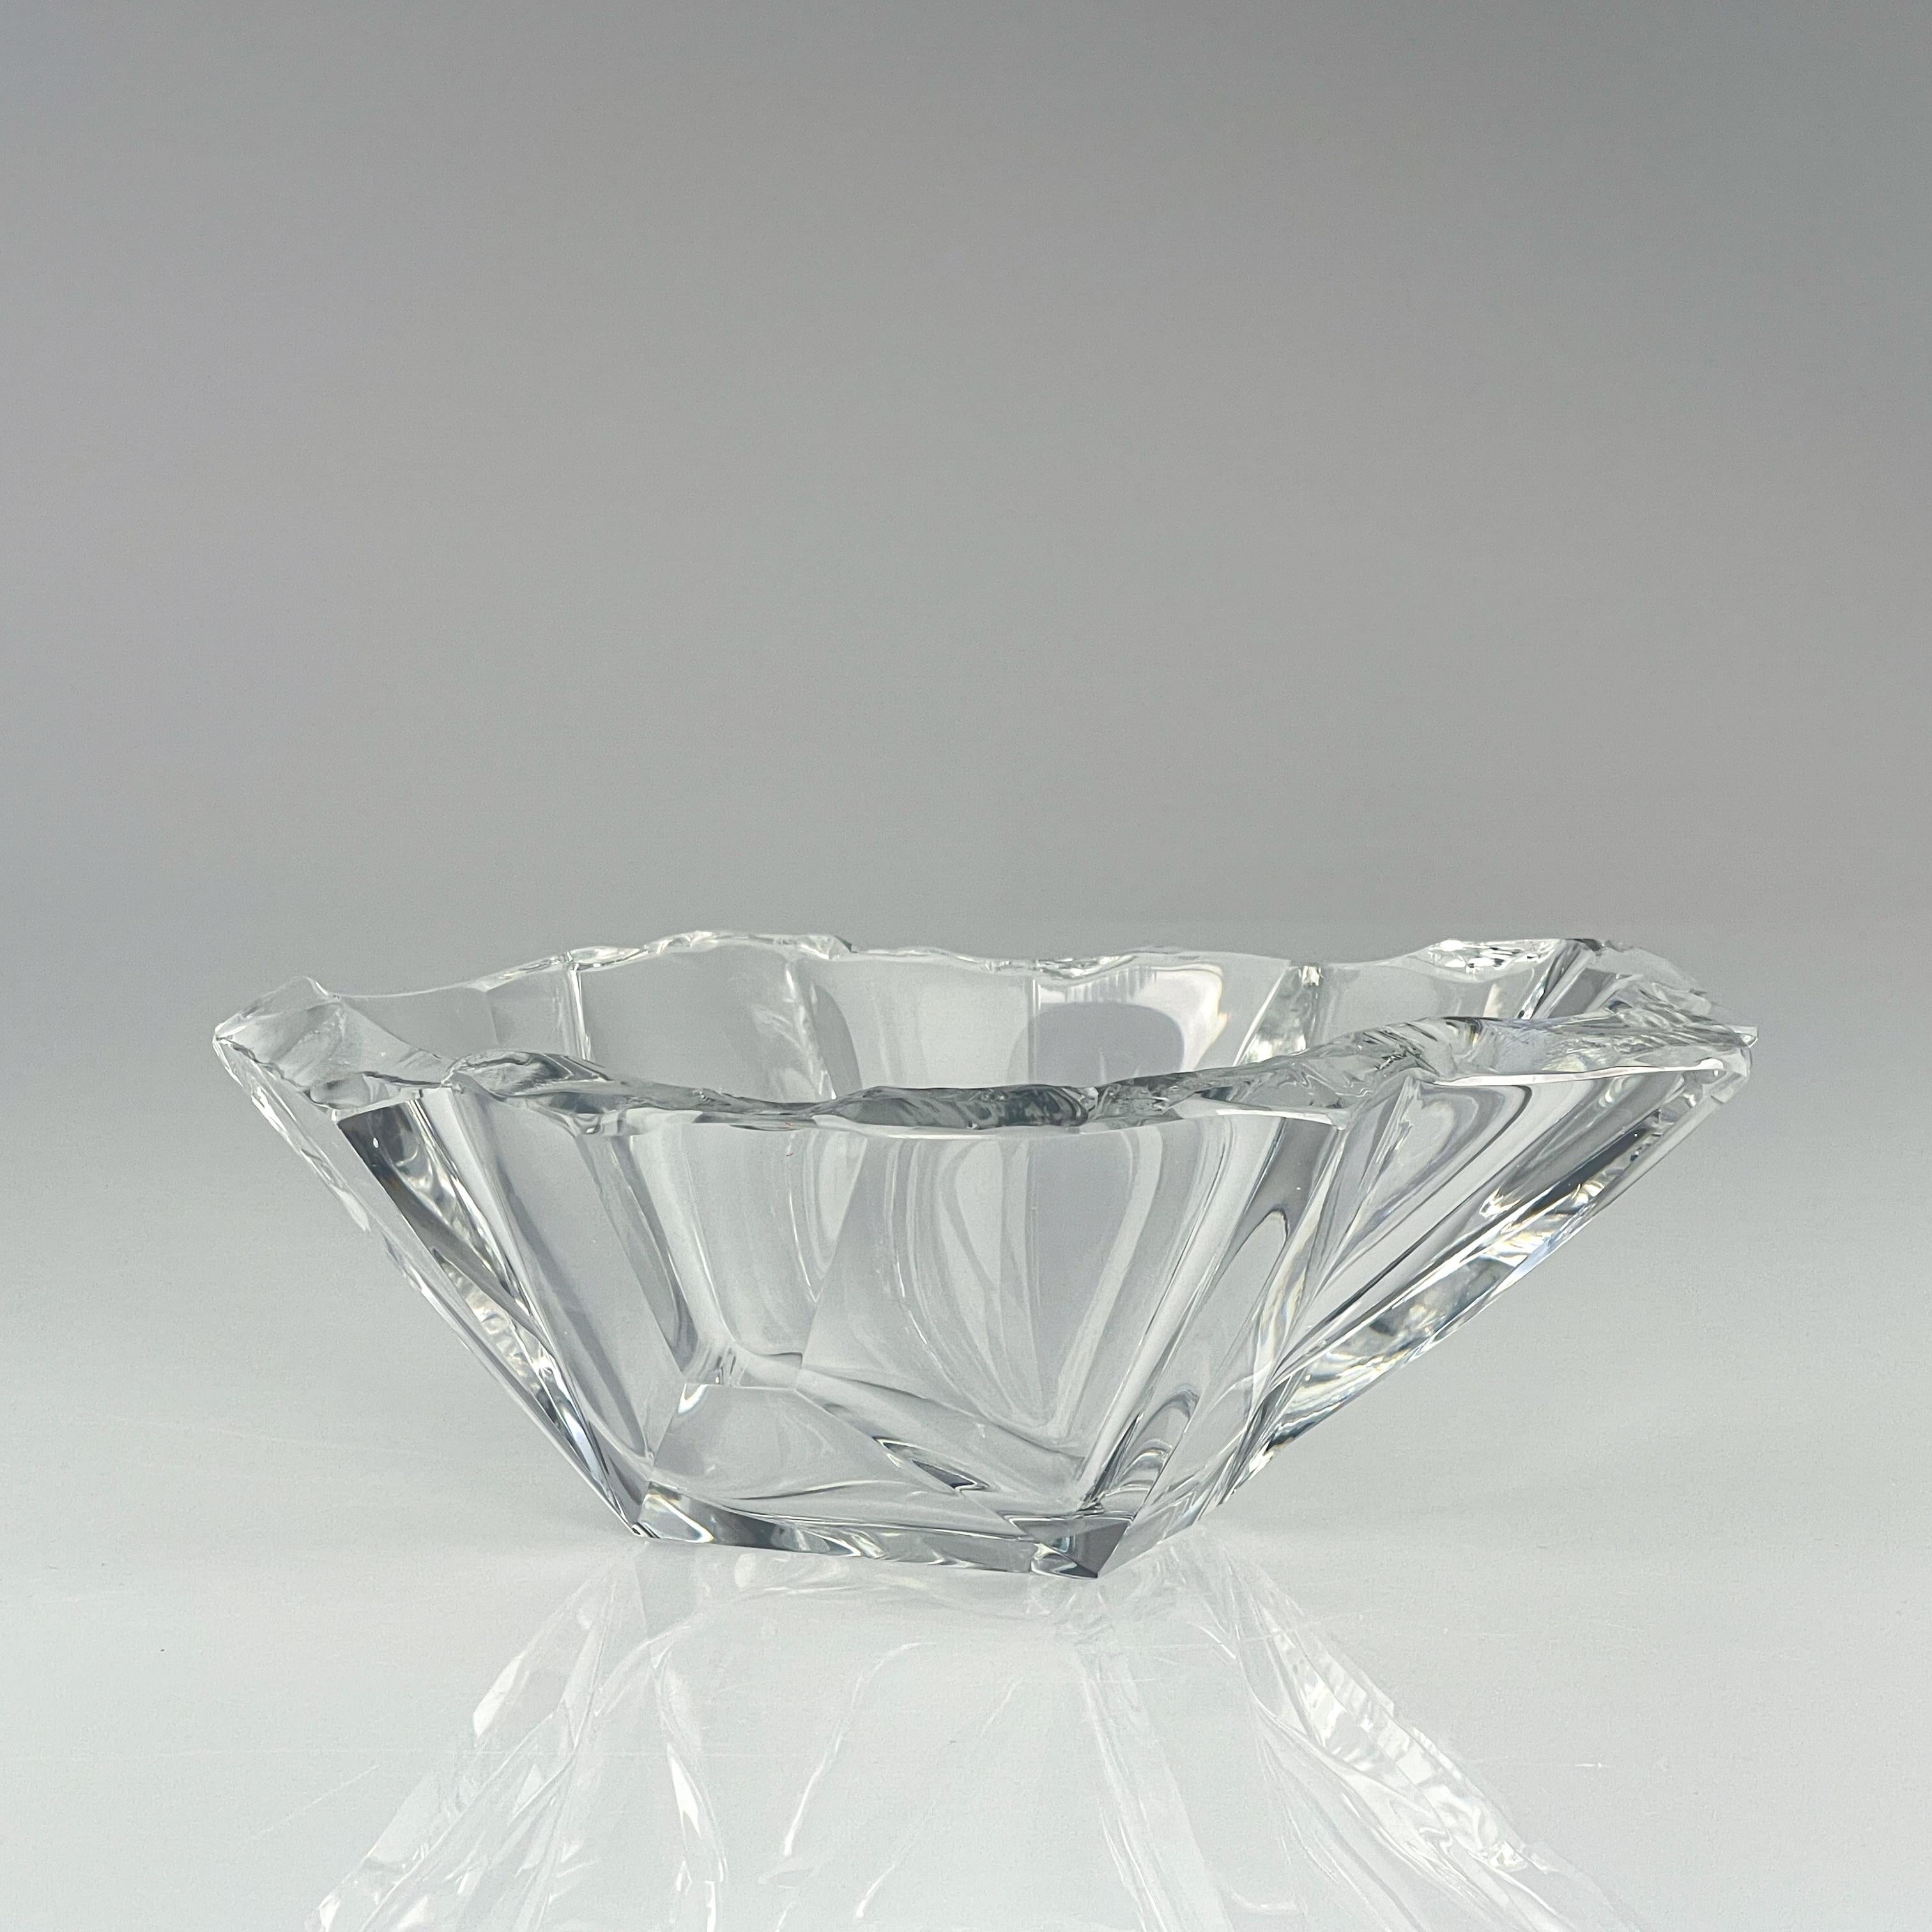 Finnish Scandinavian Modern Tapio Wirkkala Crystal Glass Art Bowl Handblown Iittala 1960